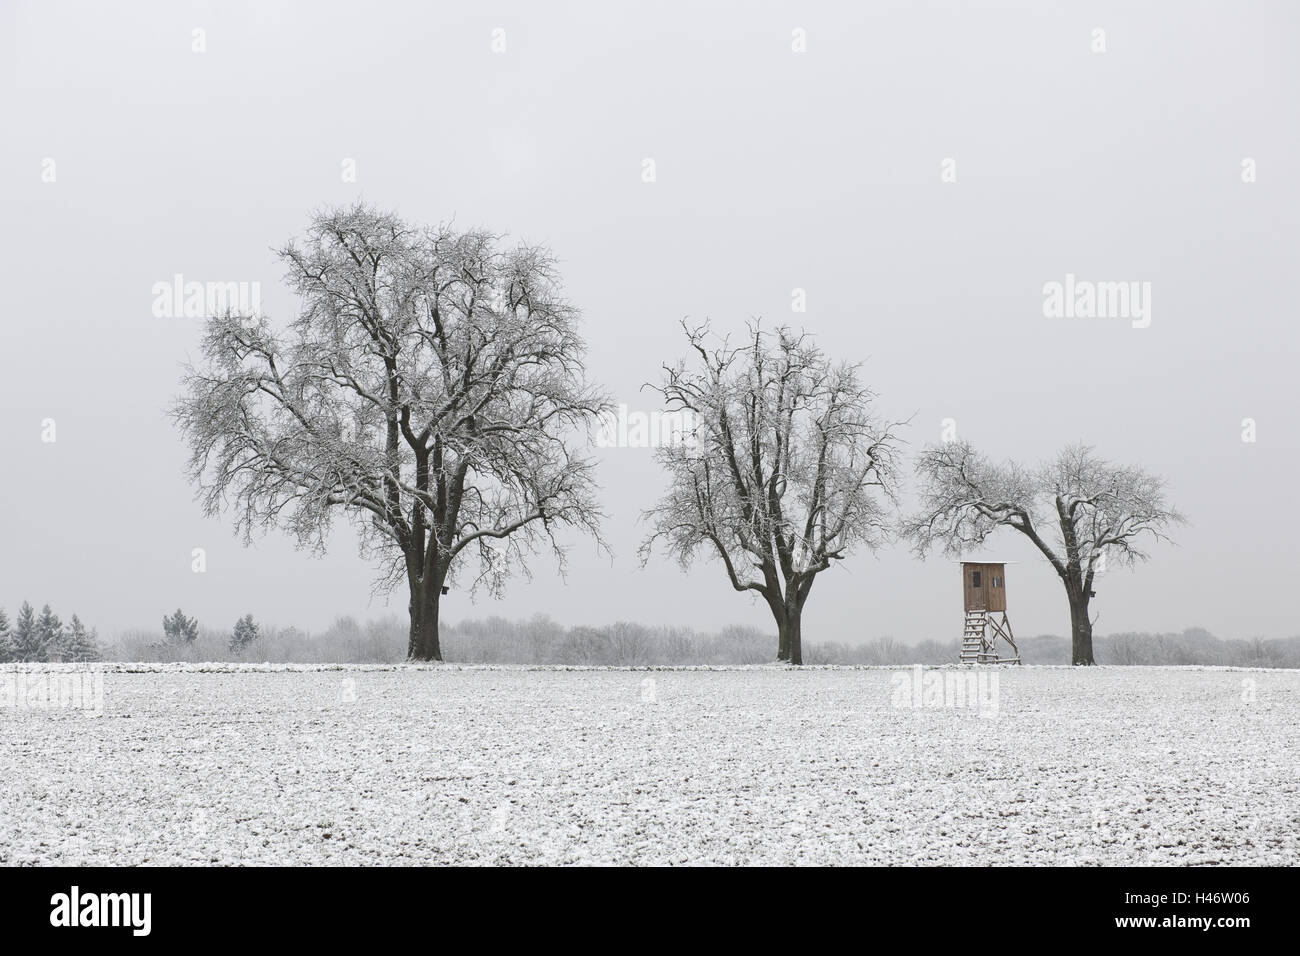 Fruit-trees in winter, Stock Photo